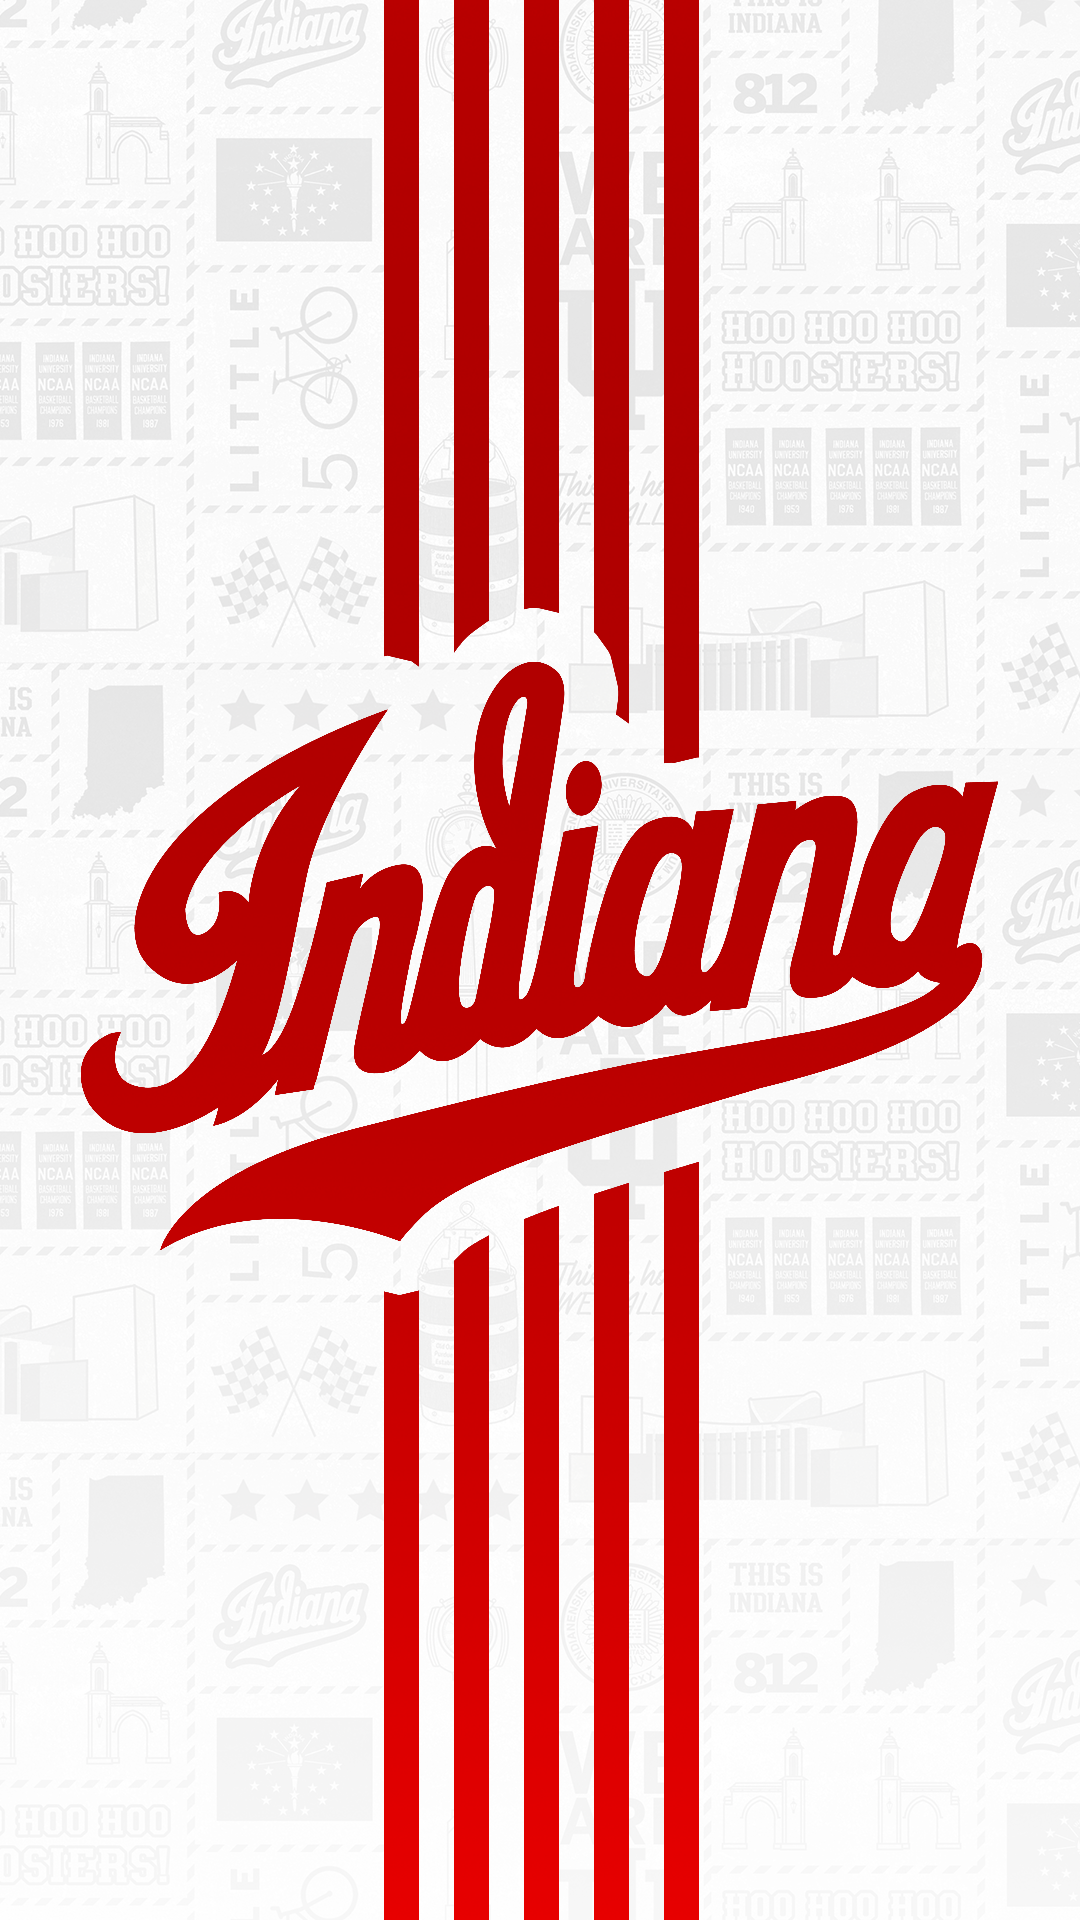 IU Basketball Logo - Phone Wallpapers - Indiana University Athletics